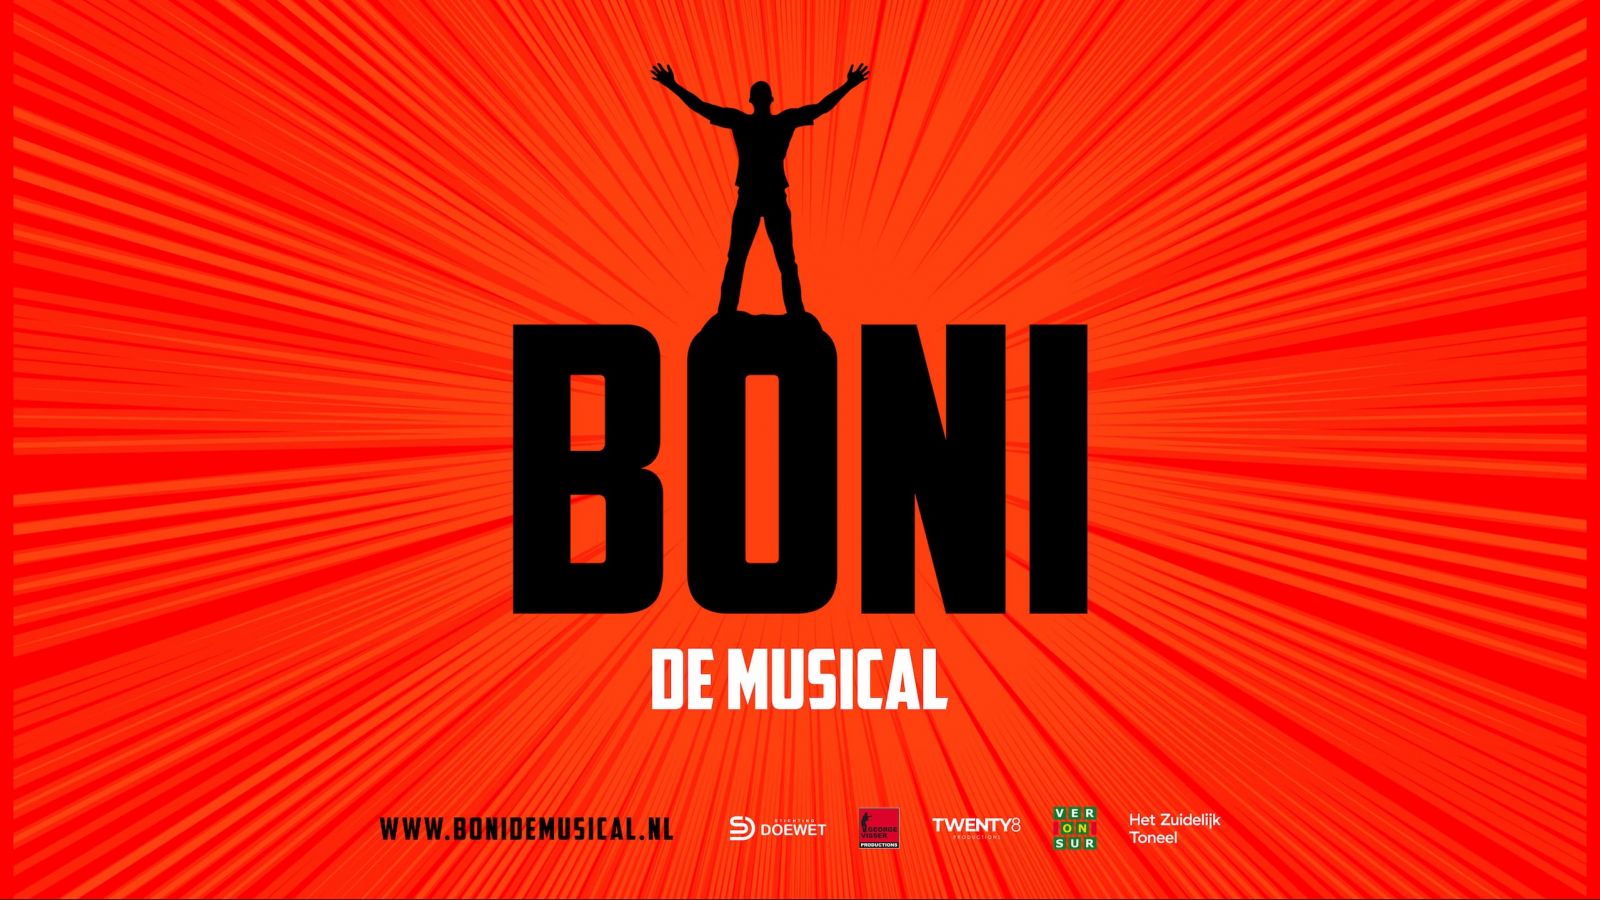 Promobeeld Boni de musical in theater Flint Amersfoort